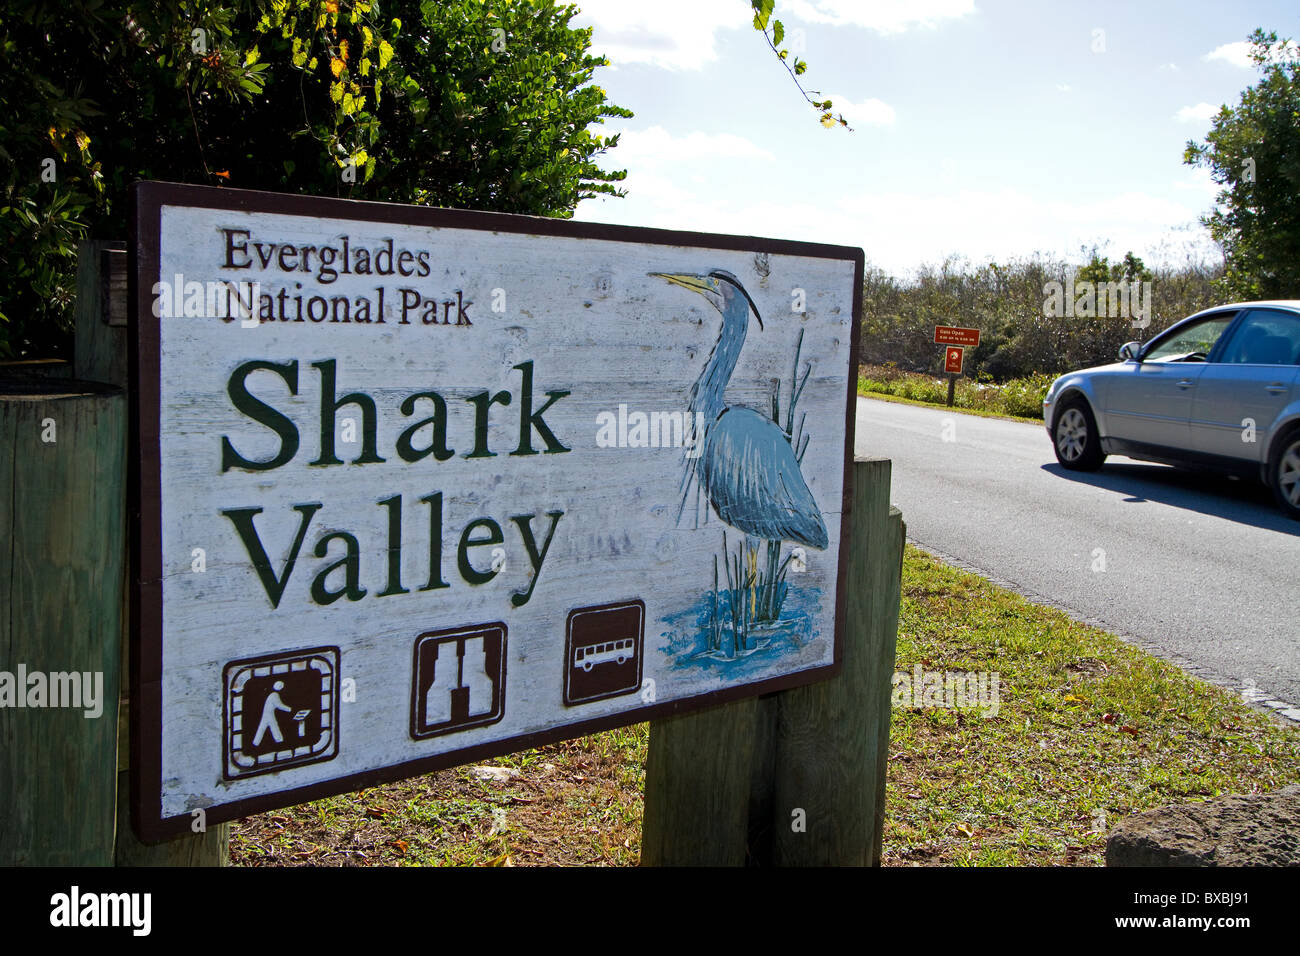 Everglades National Park Shark Valley, Florida everglades. Stock Photo